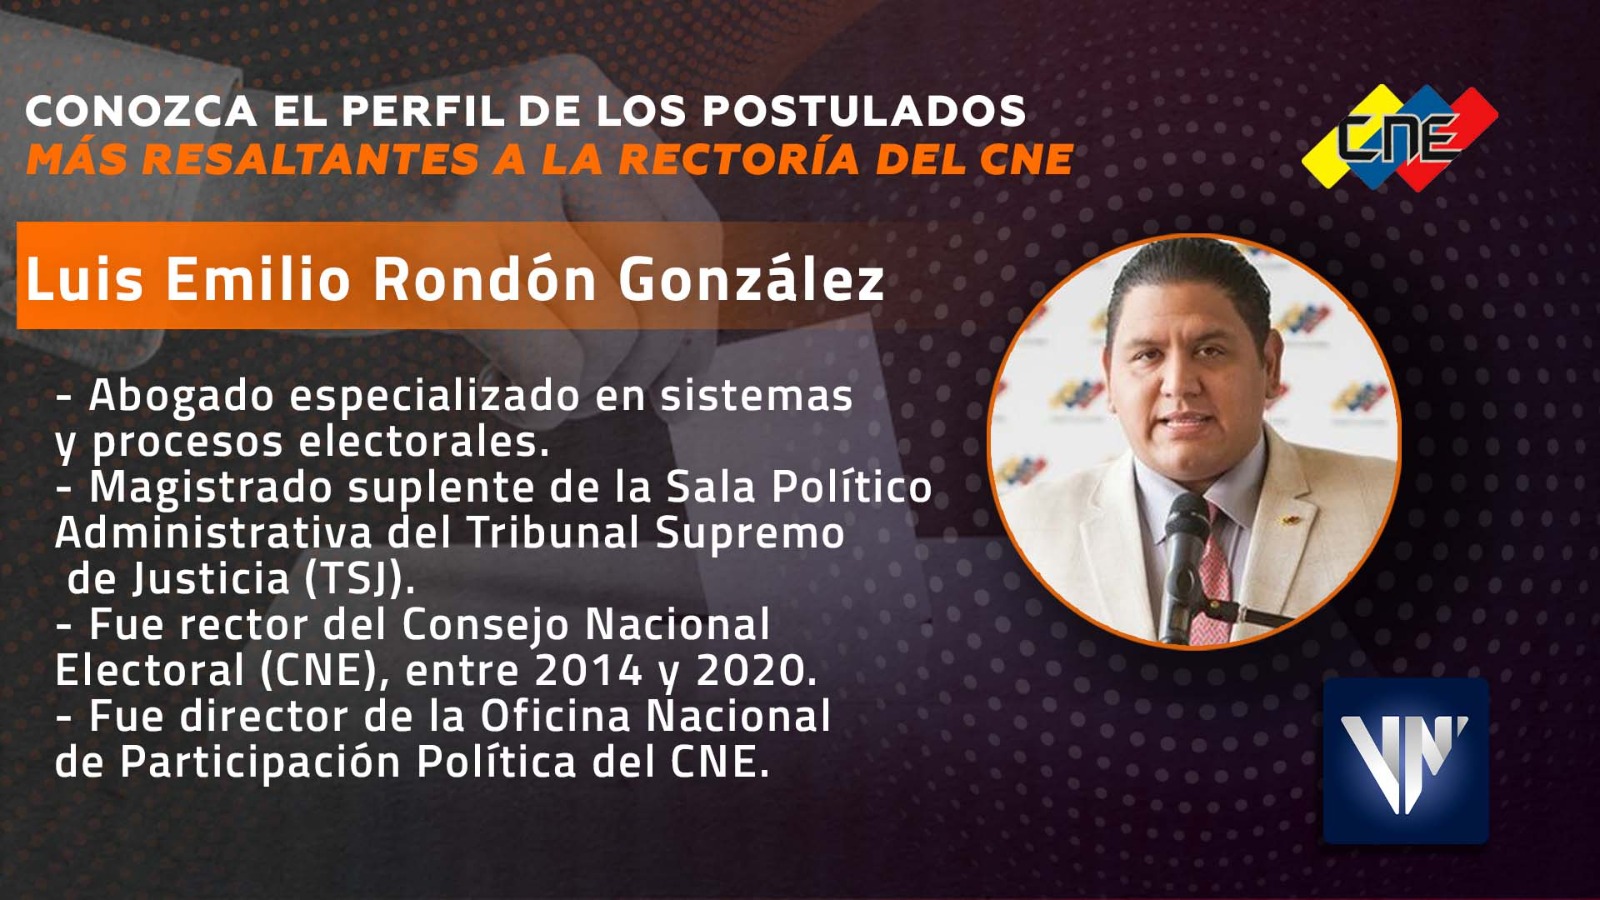 Luis Emilio Rondón González